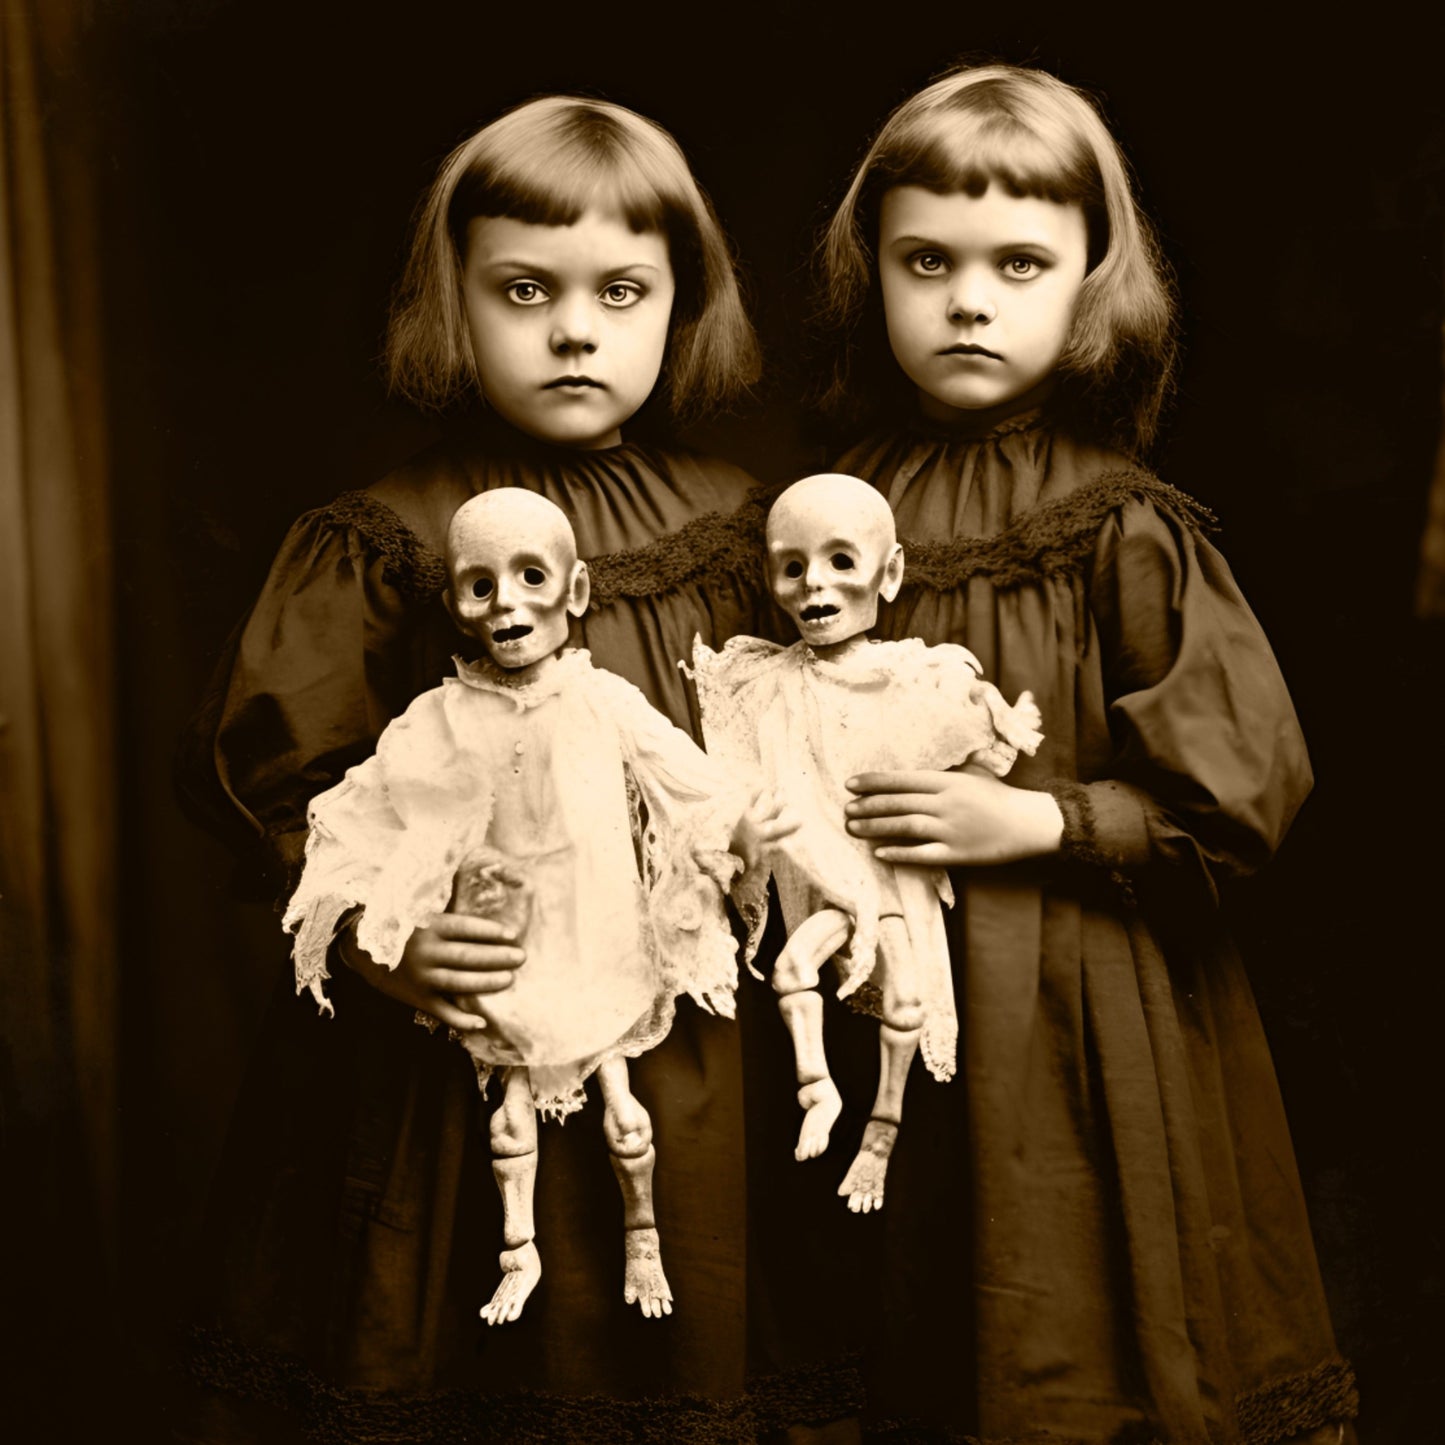 Little Girls Holding Creepy Dolls